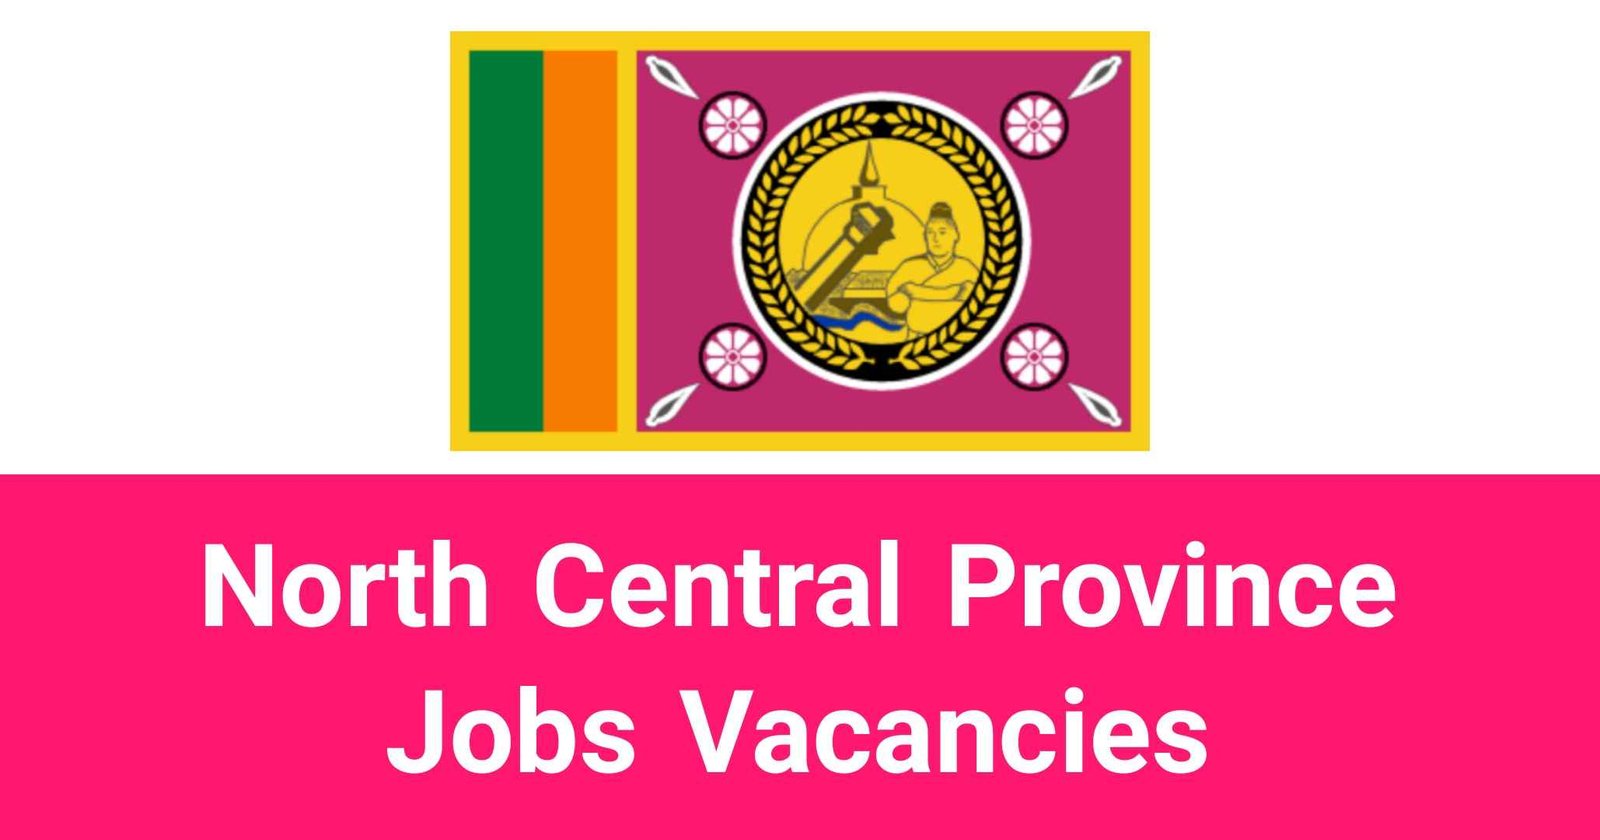 North Central Province Jobs Vacancies